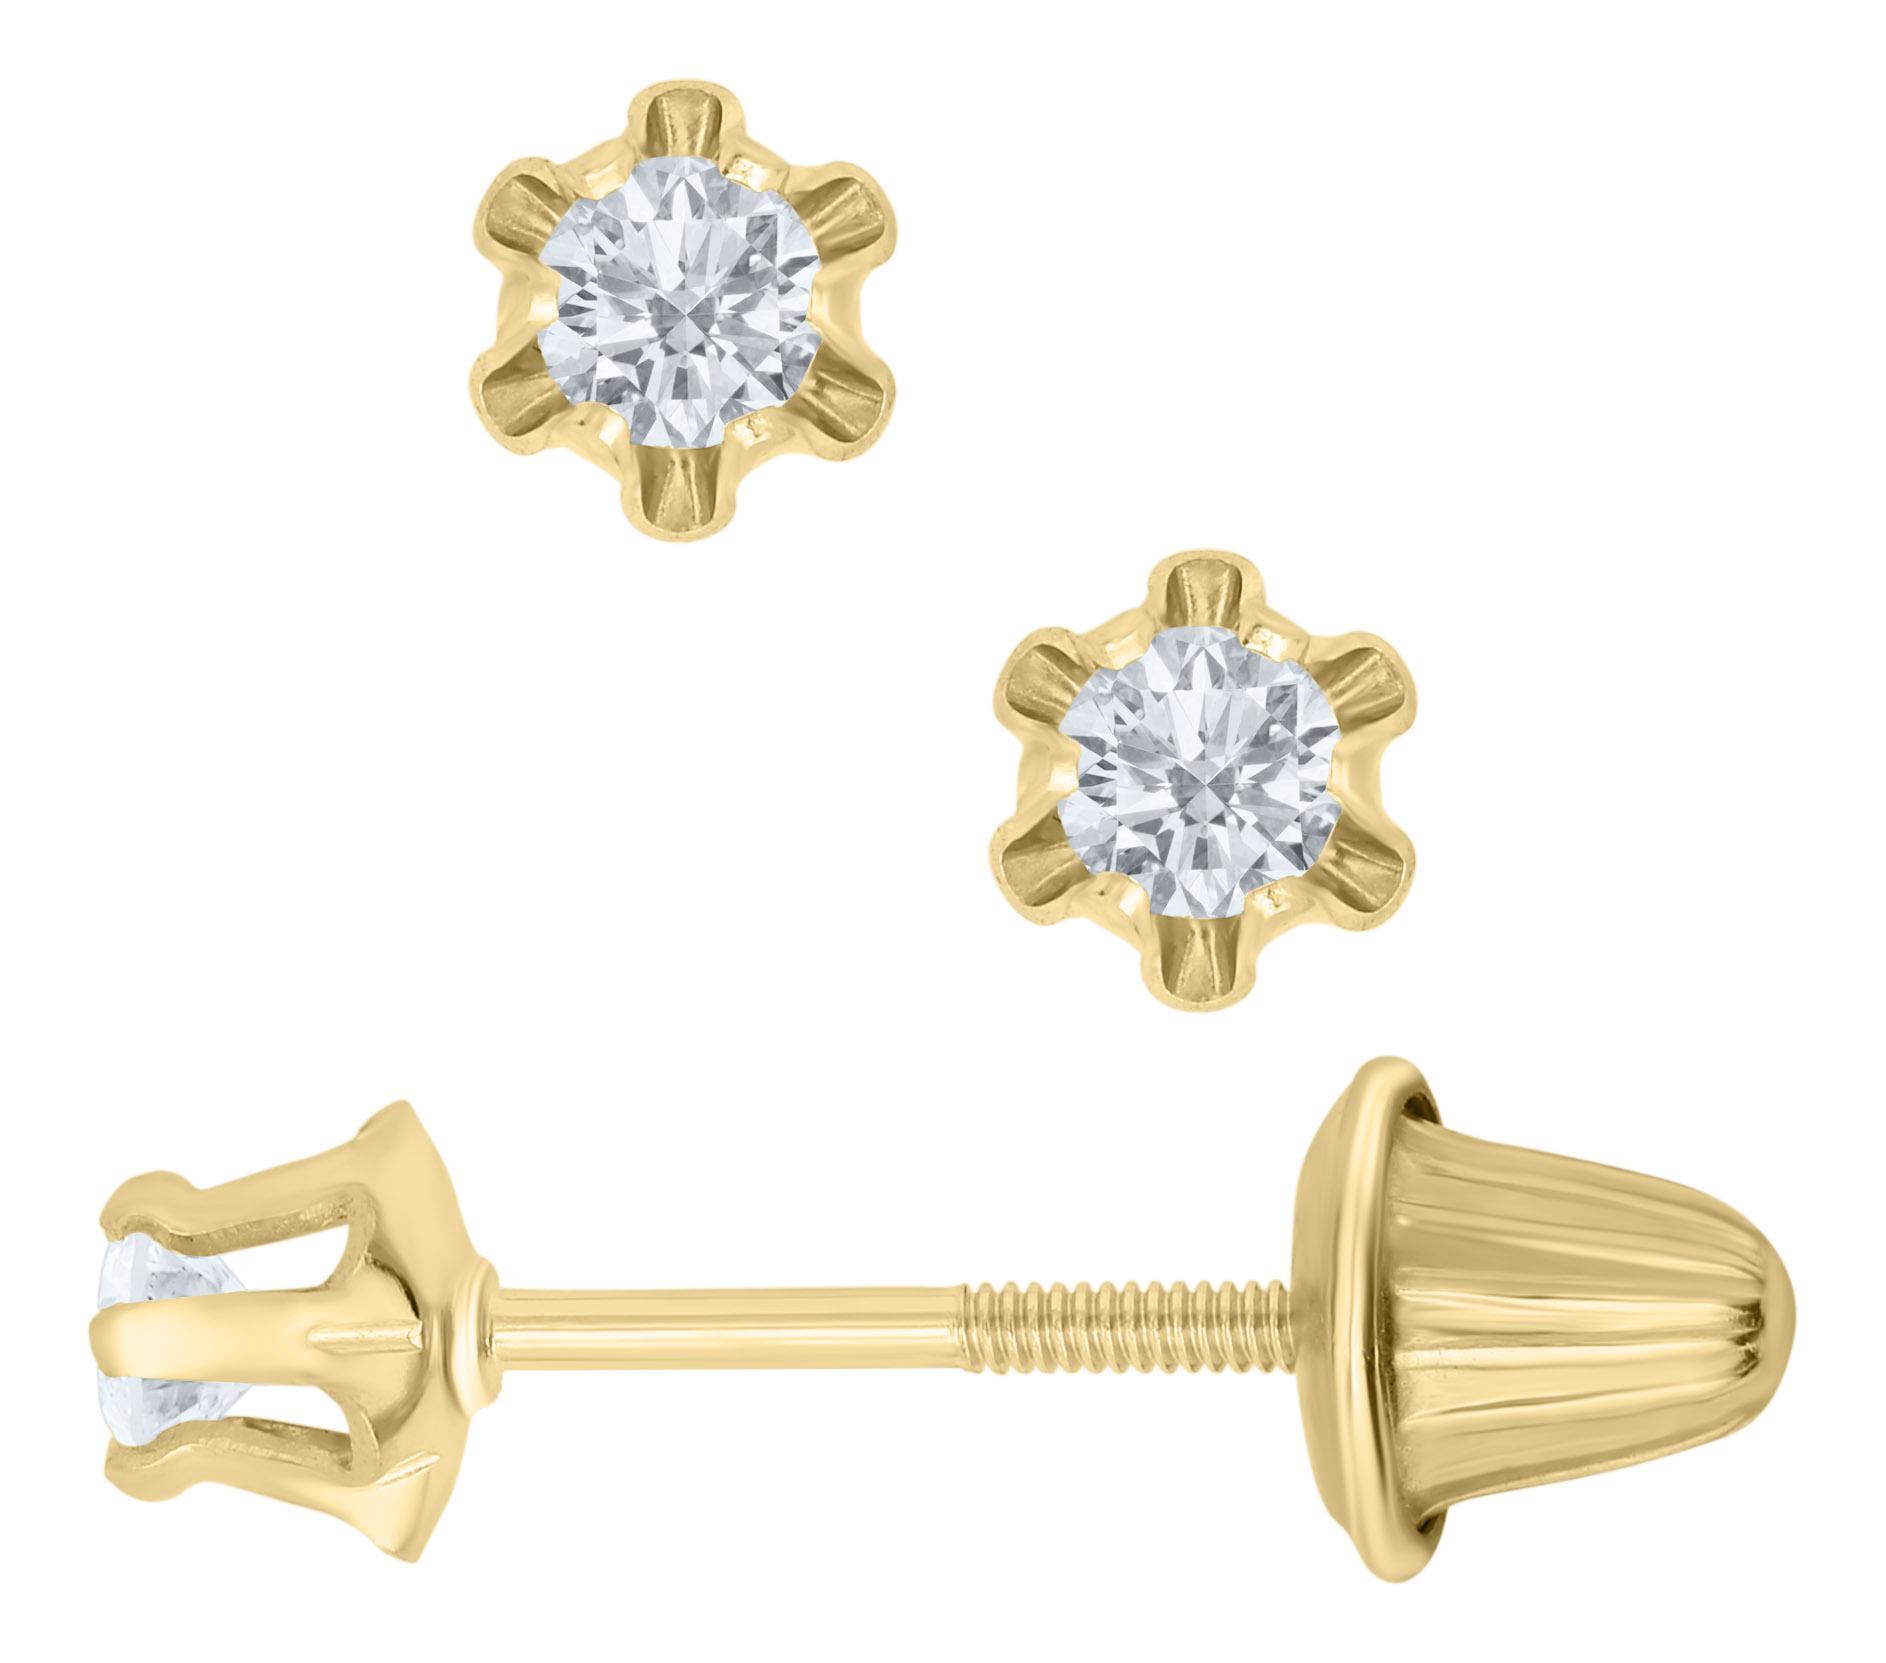 Child's Diamond Stud Earrings in 14k Yellow Gold